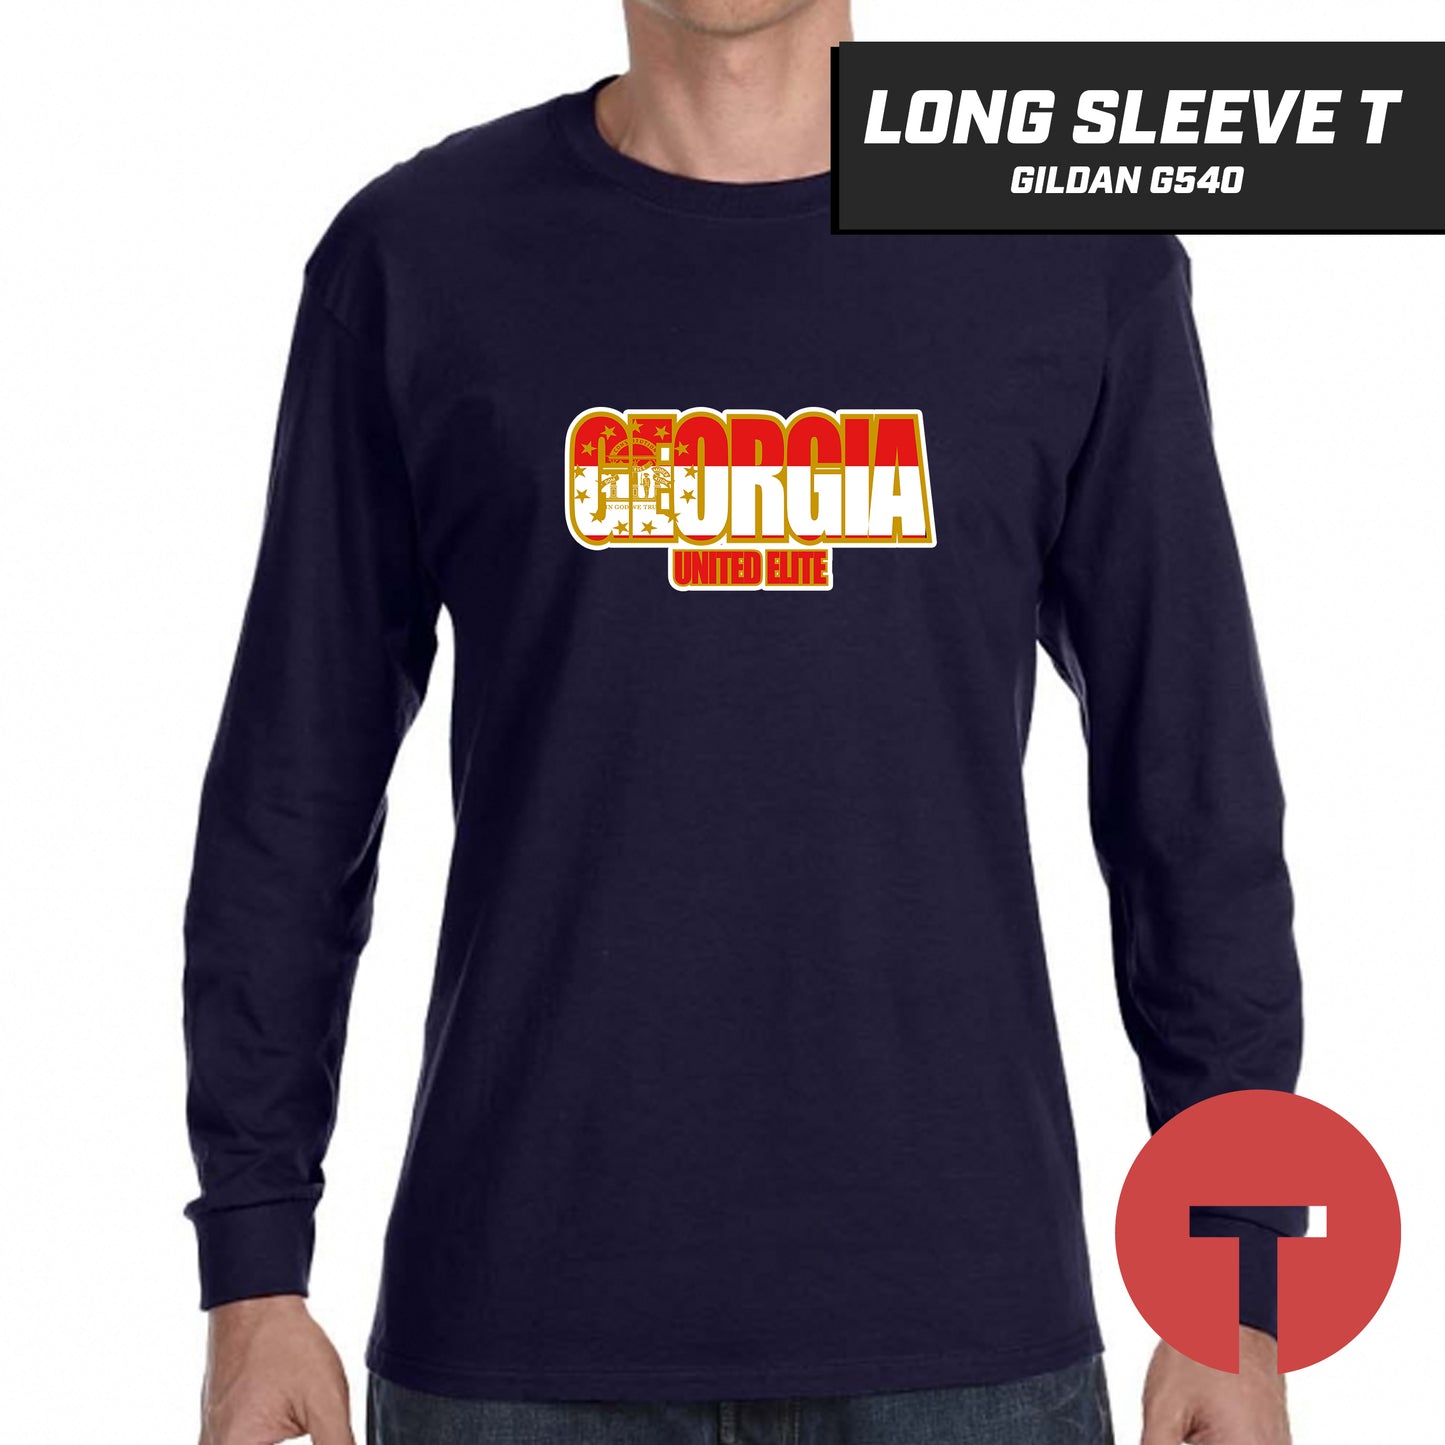 Georgia United Elite - LOGO 1 - Long-Sleeve T-Shirt Gildan G540